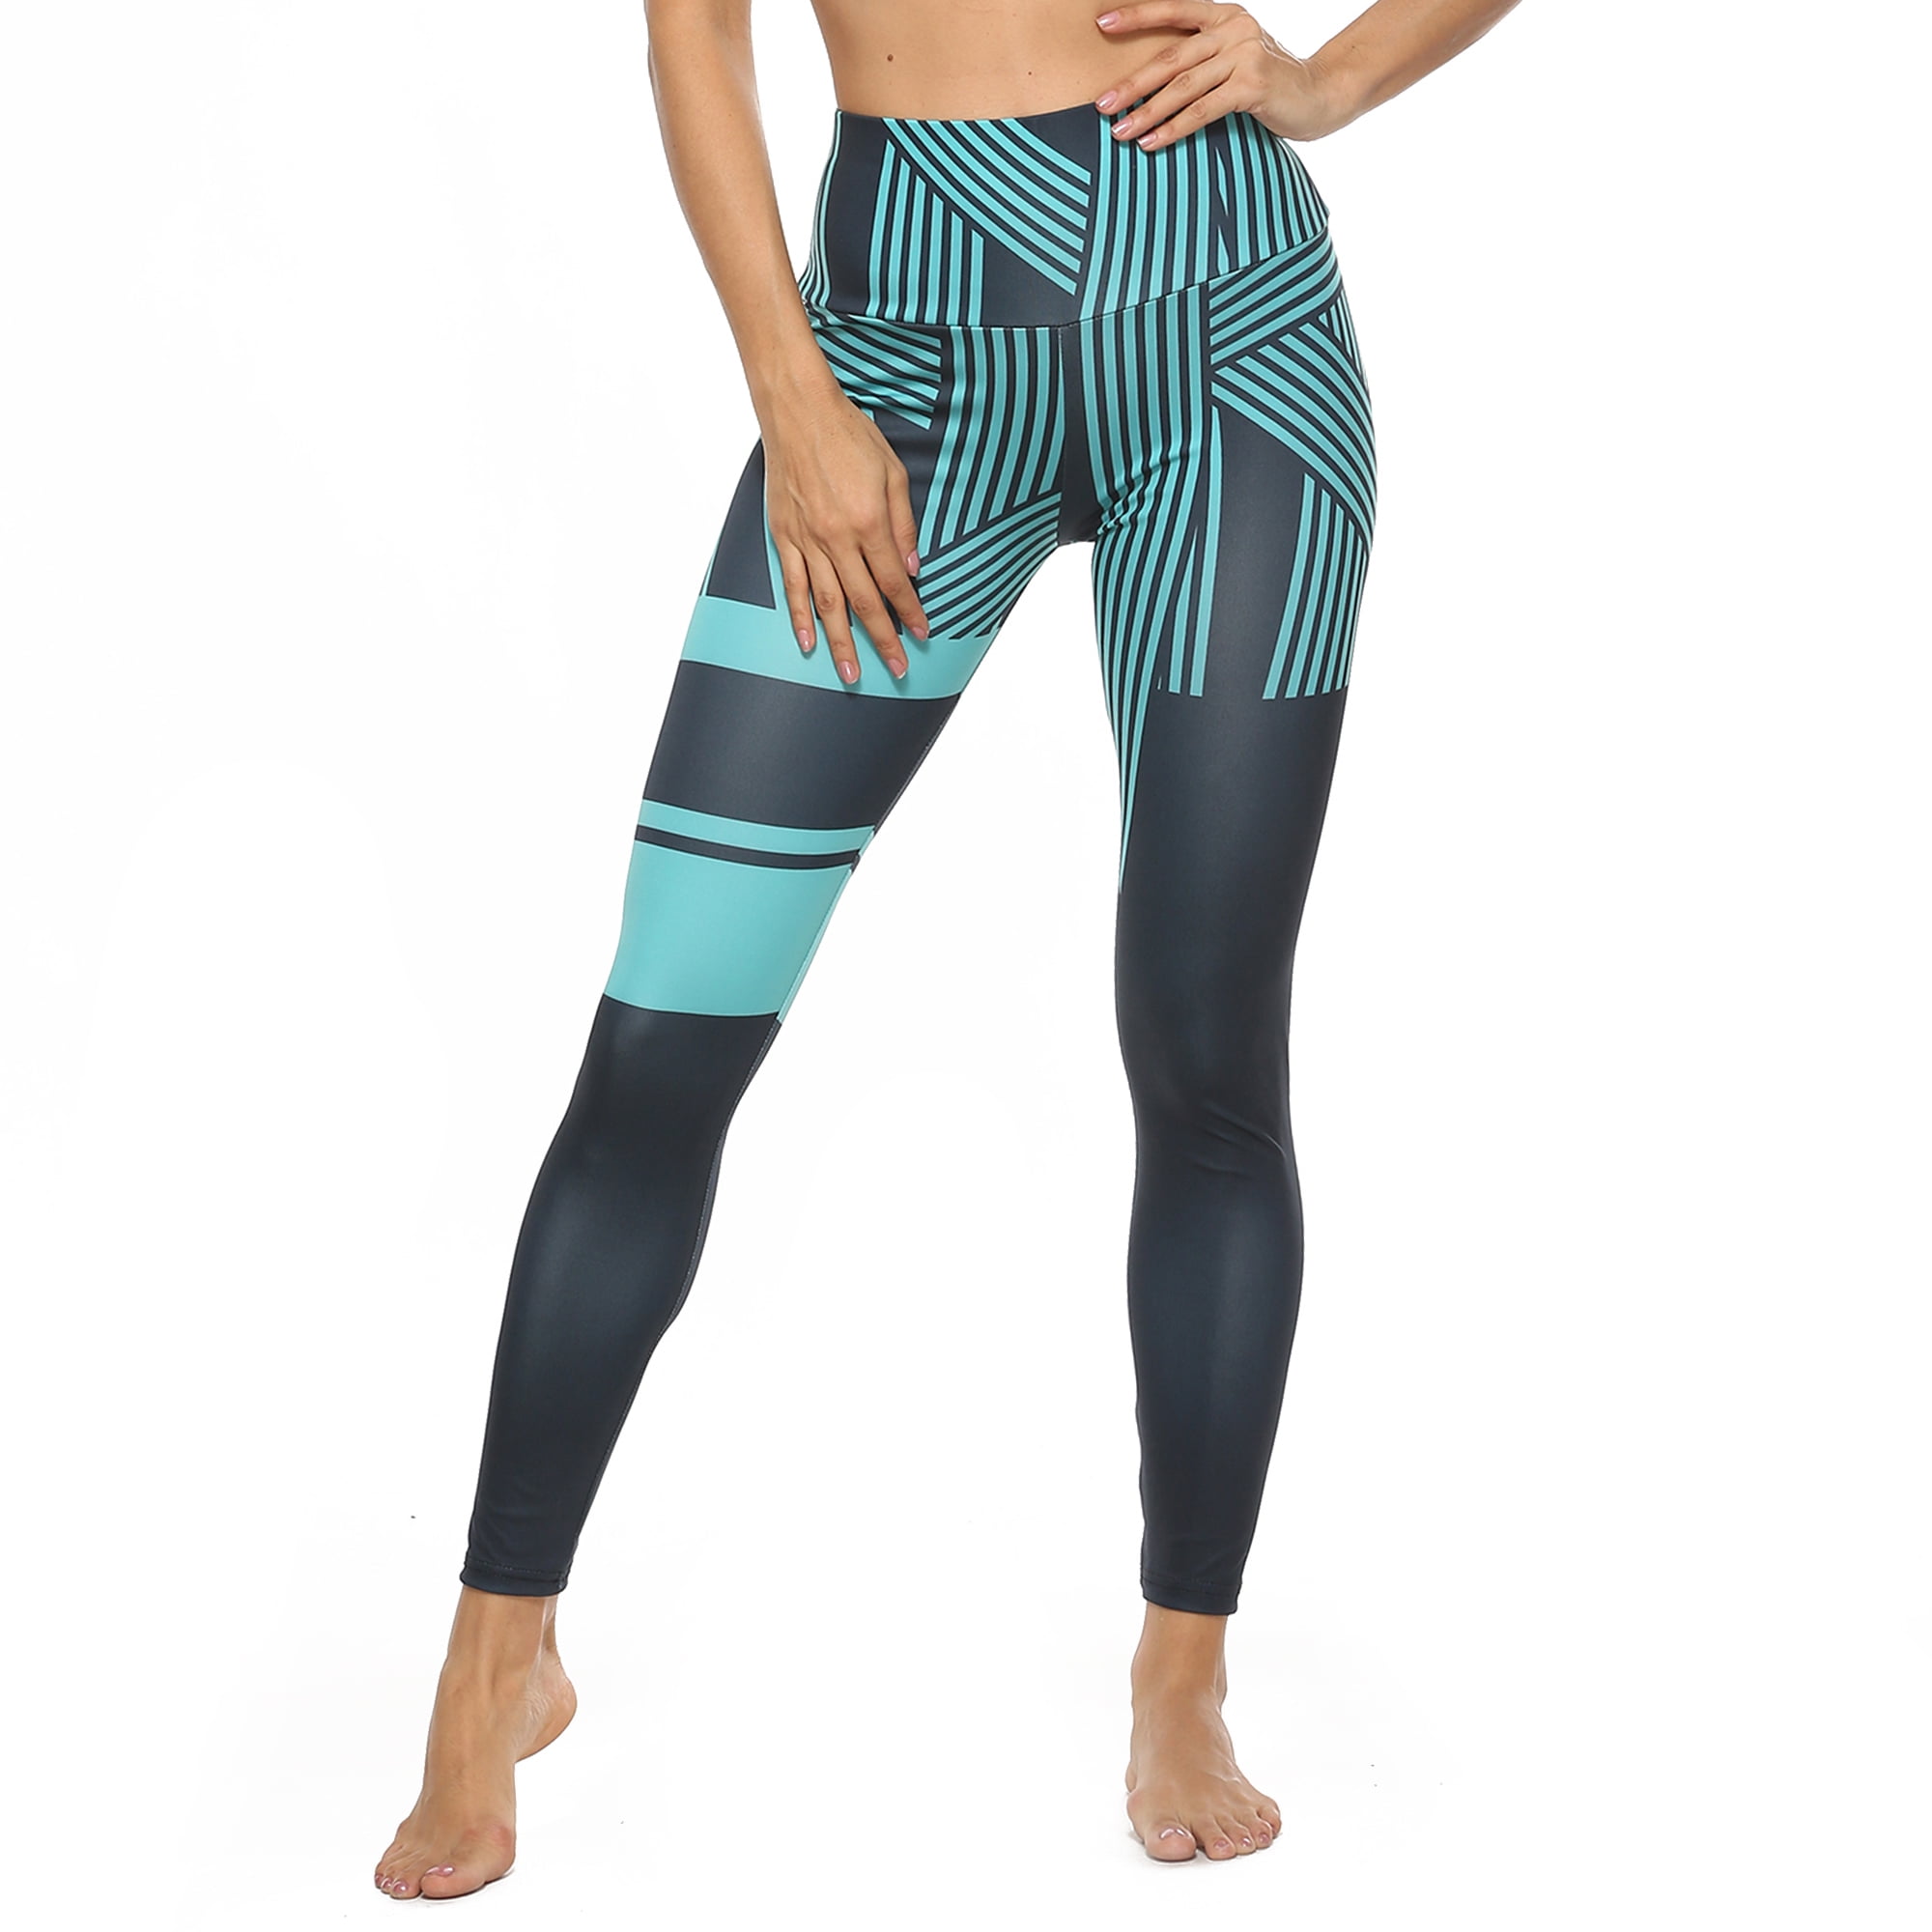 Fittoo Fittoo Women High Waist Stripes Digital Print Yoga Leggings Fitness Sport Workout